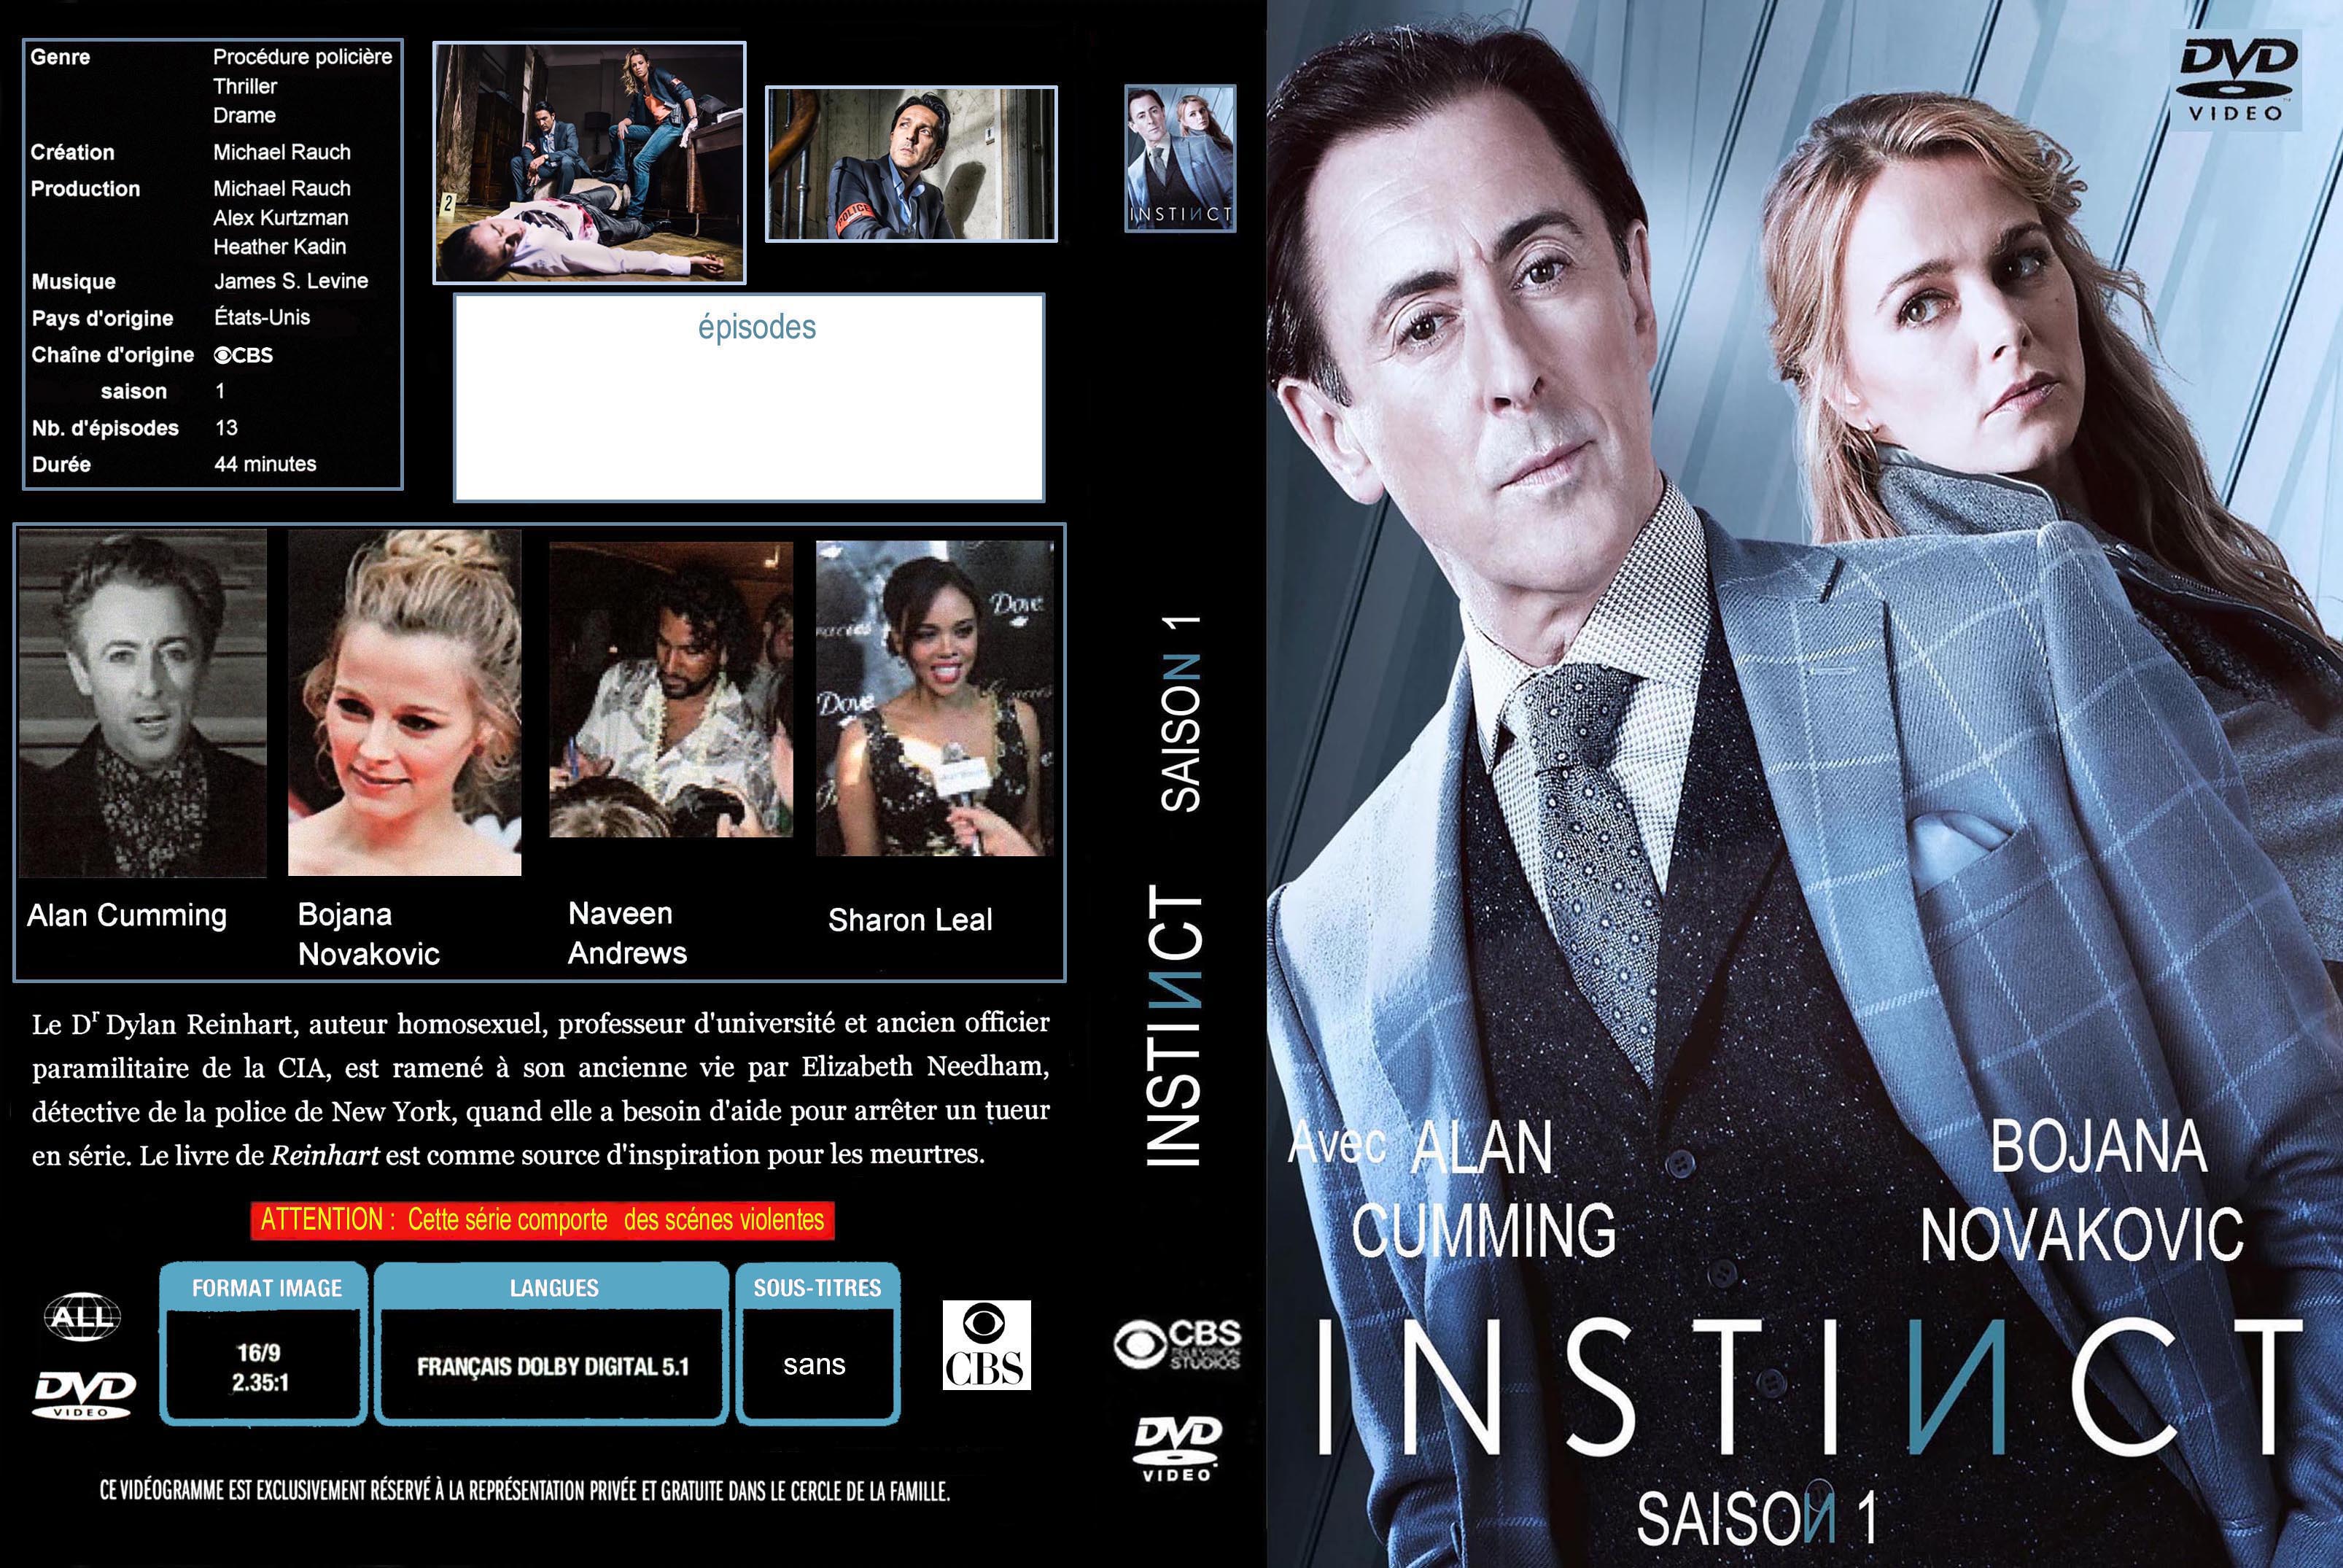 Jaquette DVD Instinct saison 1 custom